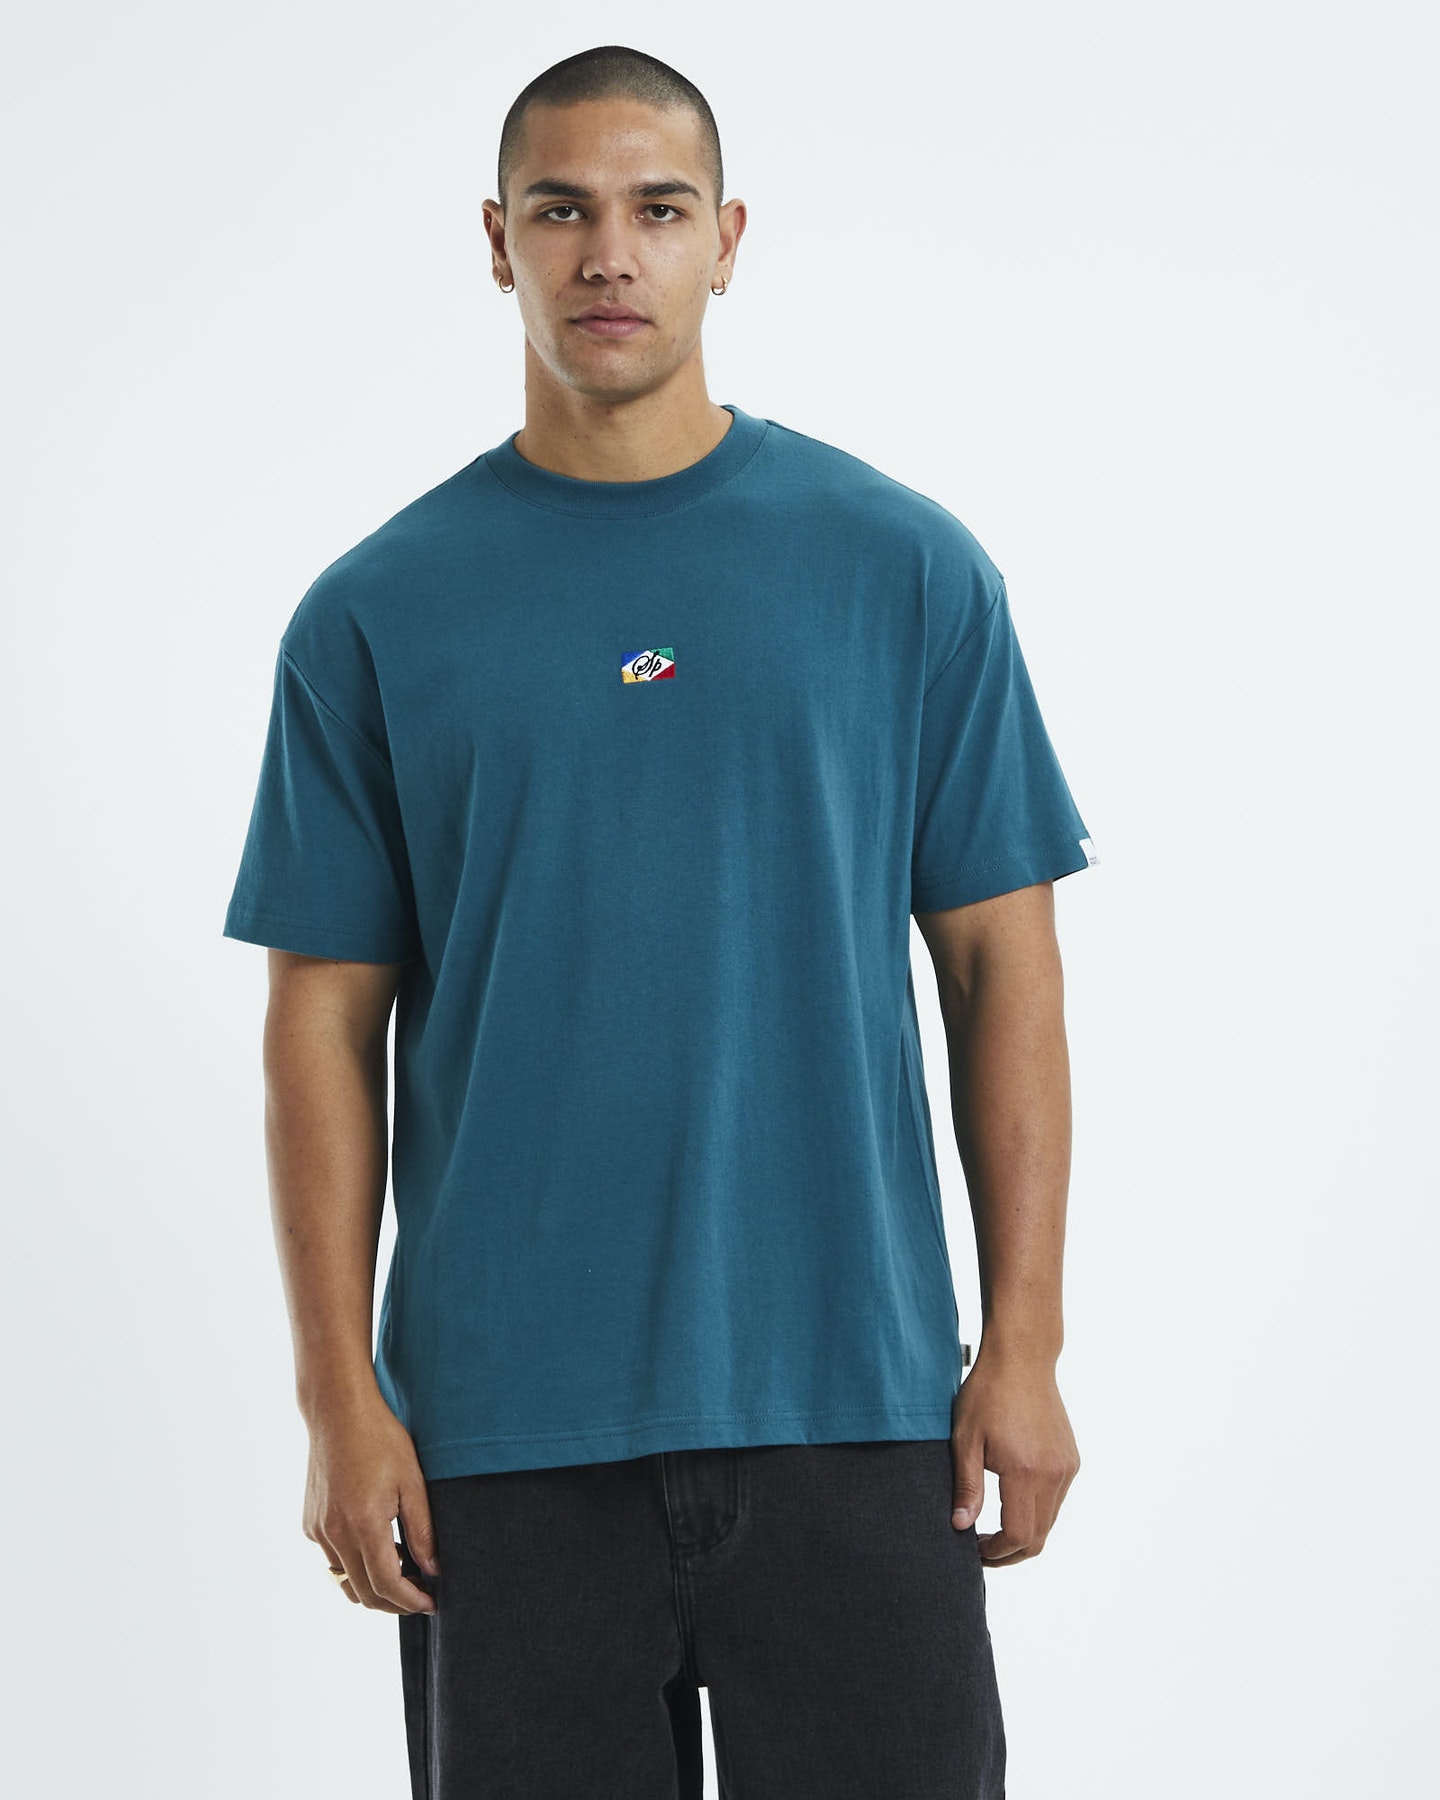 Spencer Project Flag T-Shirt - Jade Green | SurfStitch